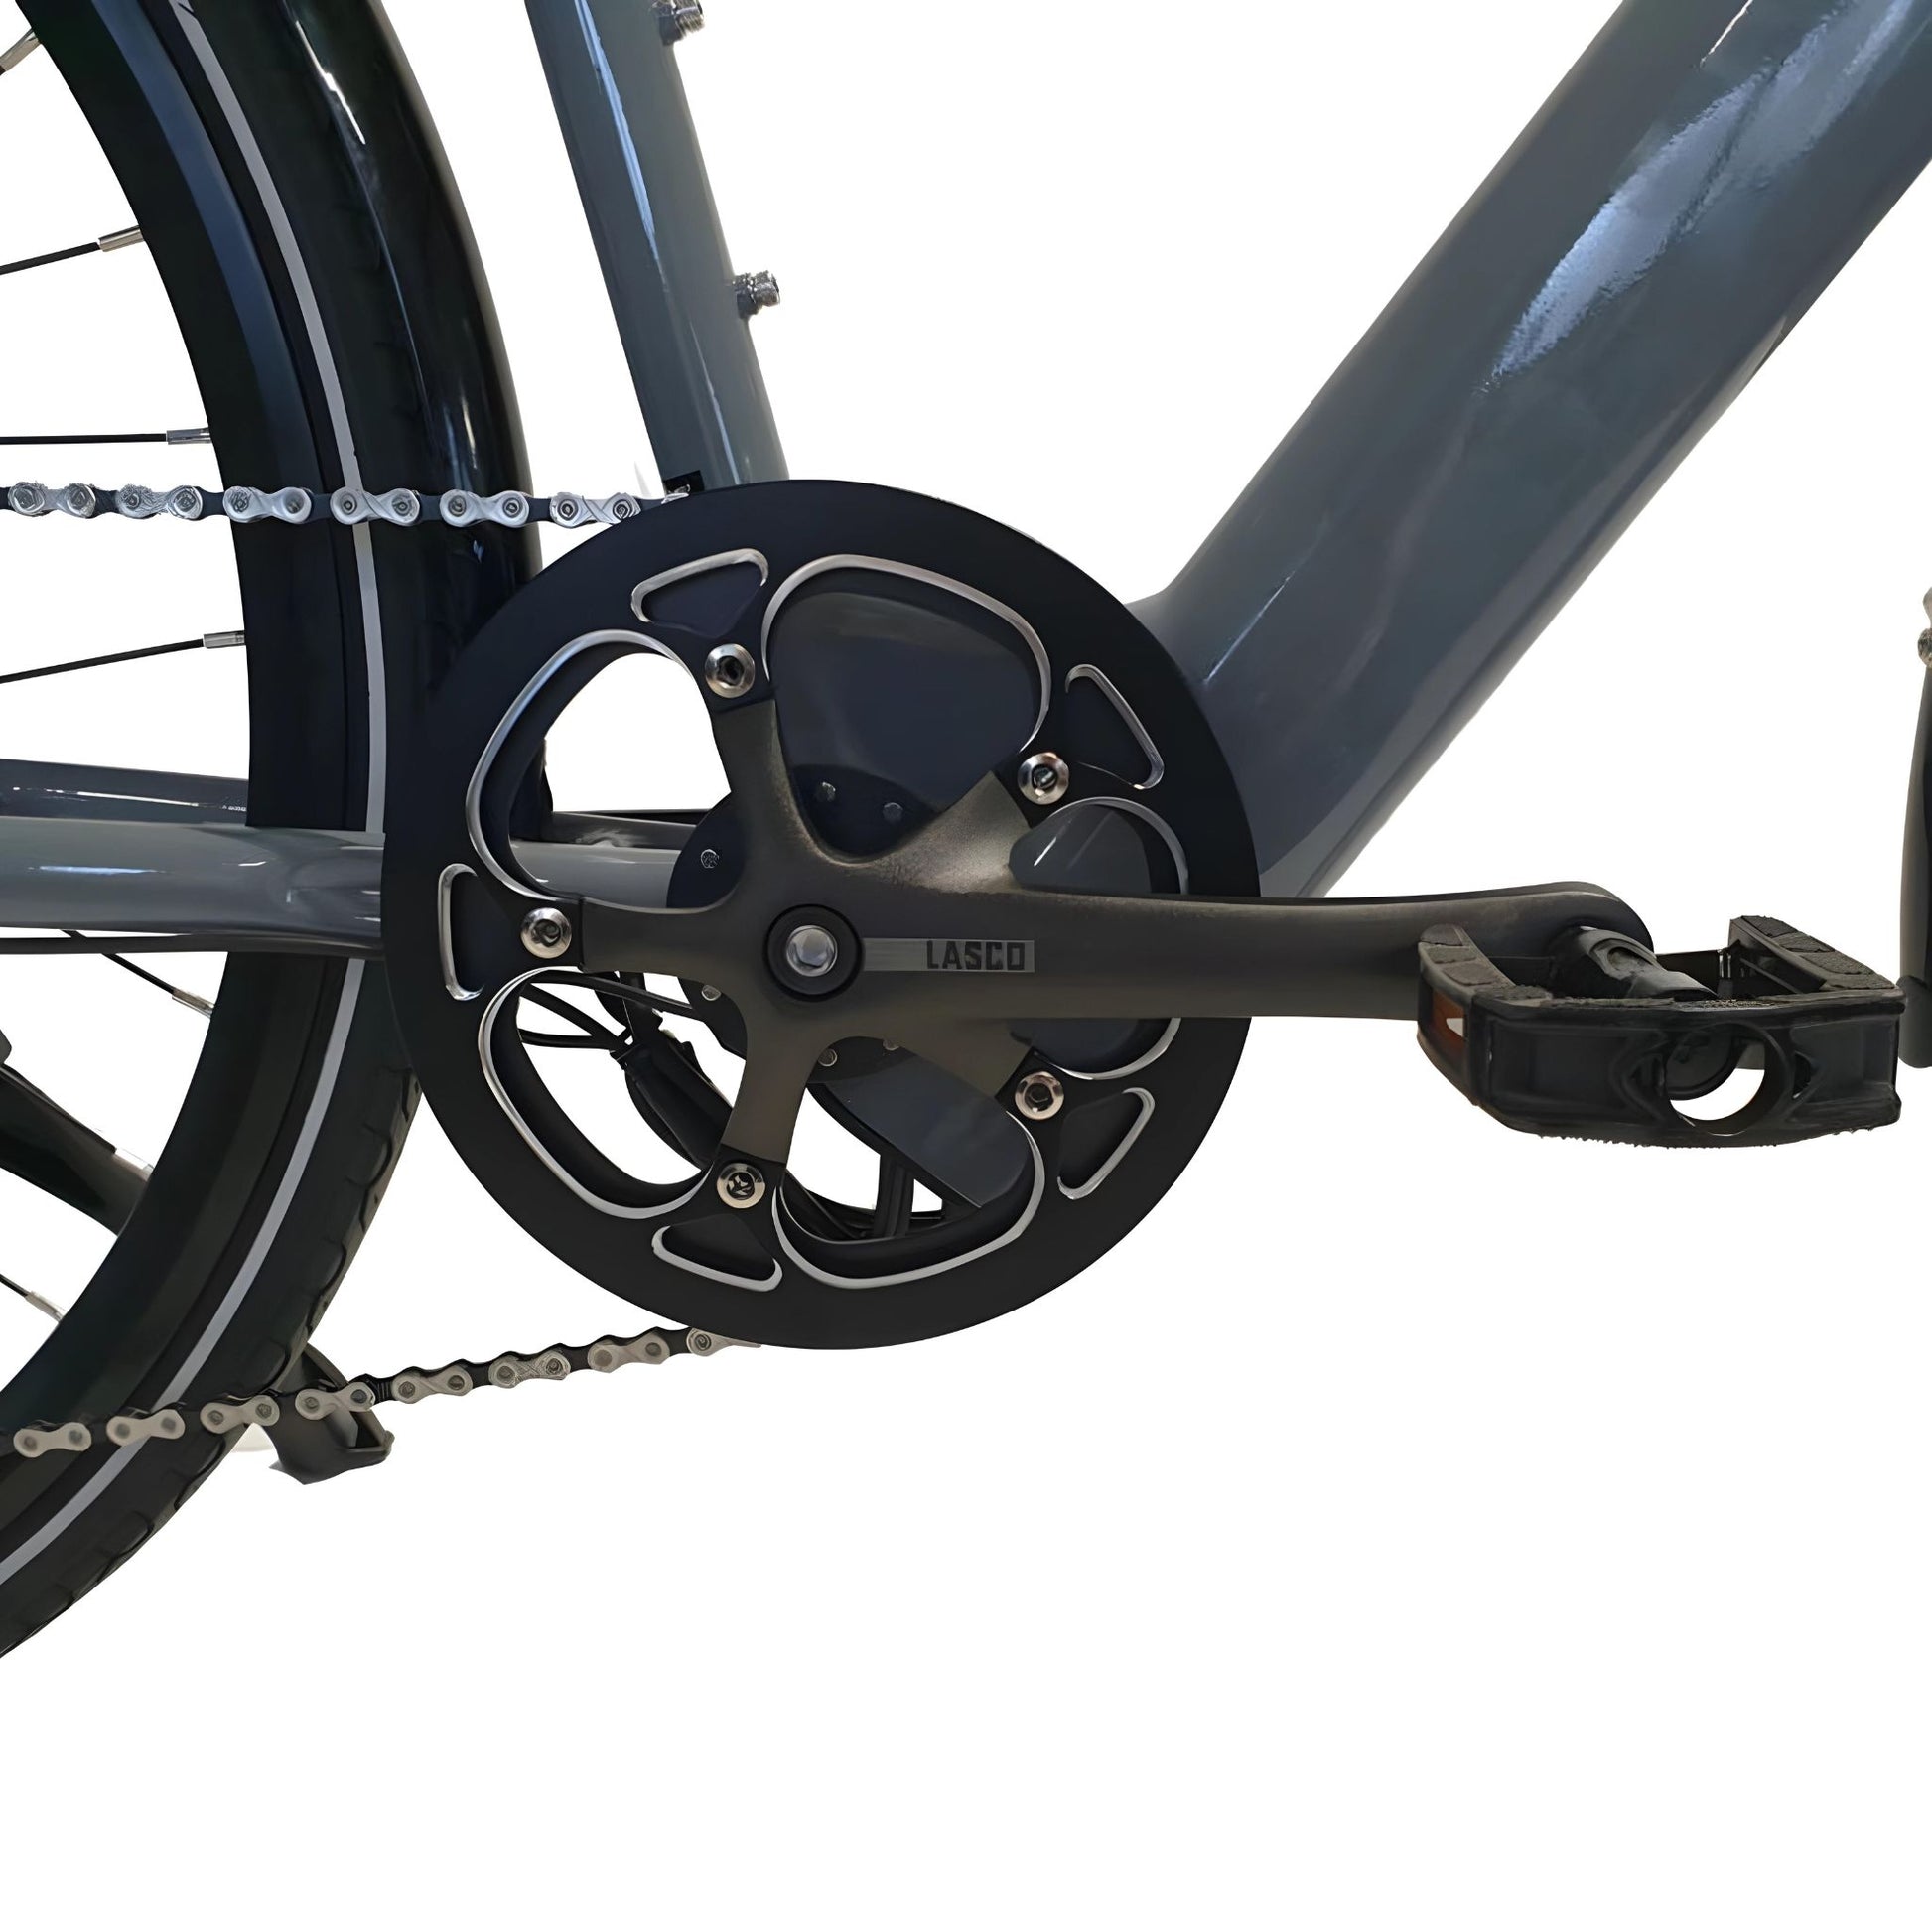 Close-up of Geobike E-Urban e-bike chainset and pedals